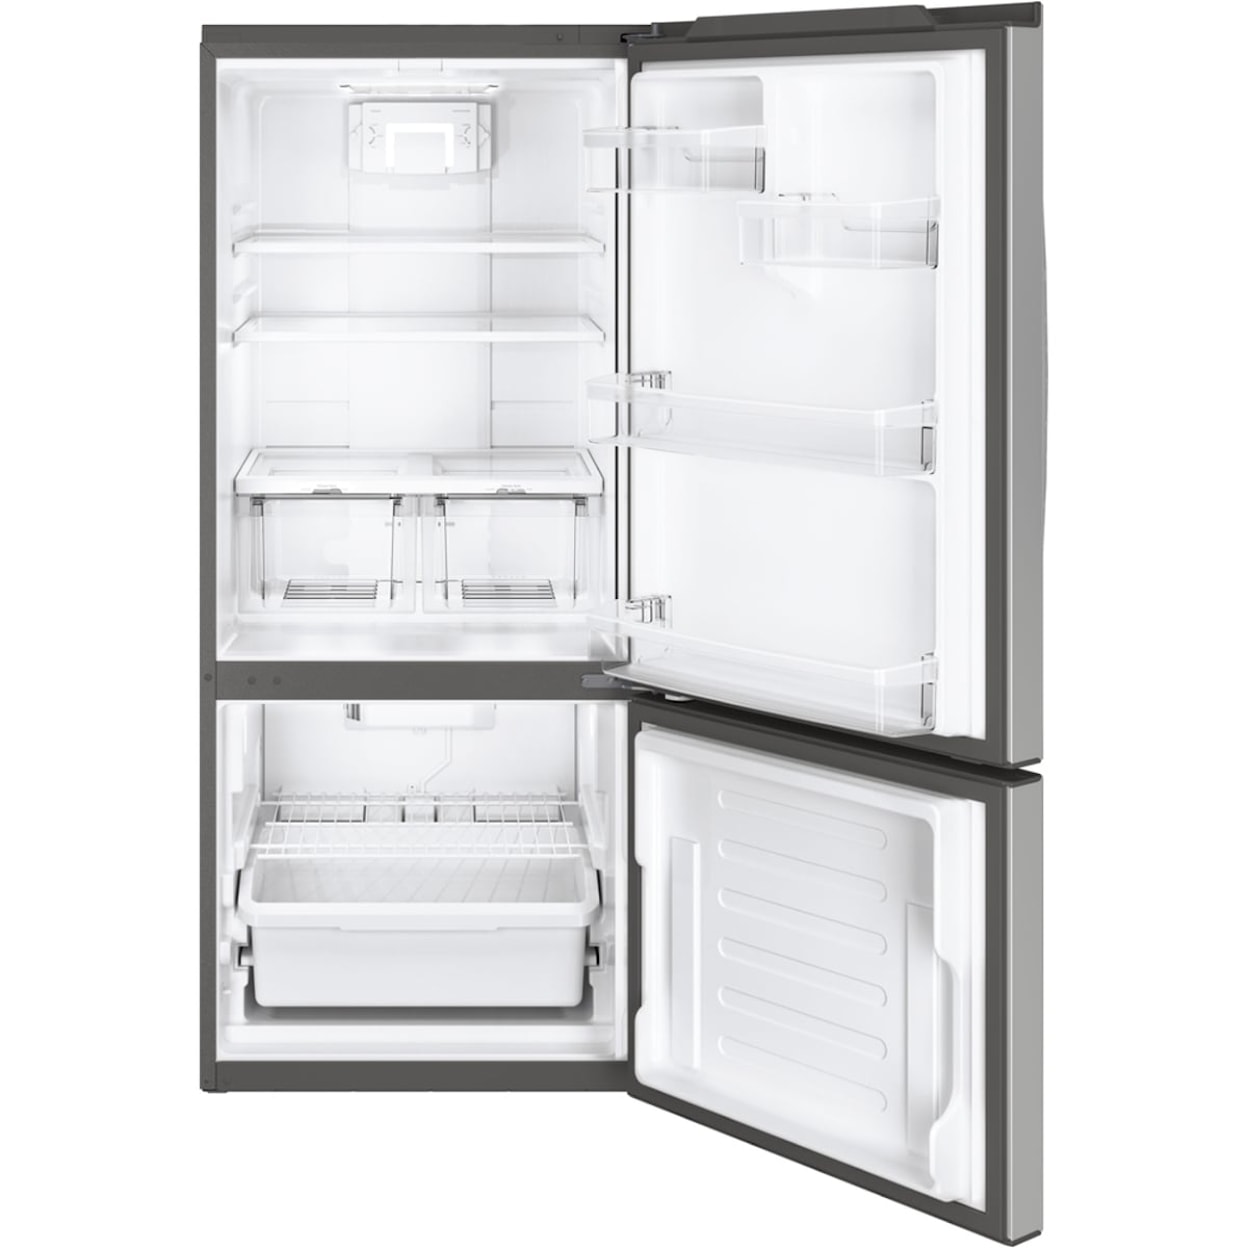 GE Appliances Refridgerators 20.9 Cu. Ft. Bottom Mount Refrigerator